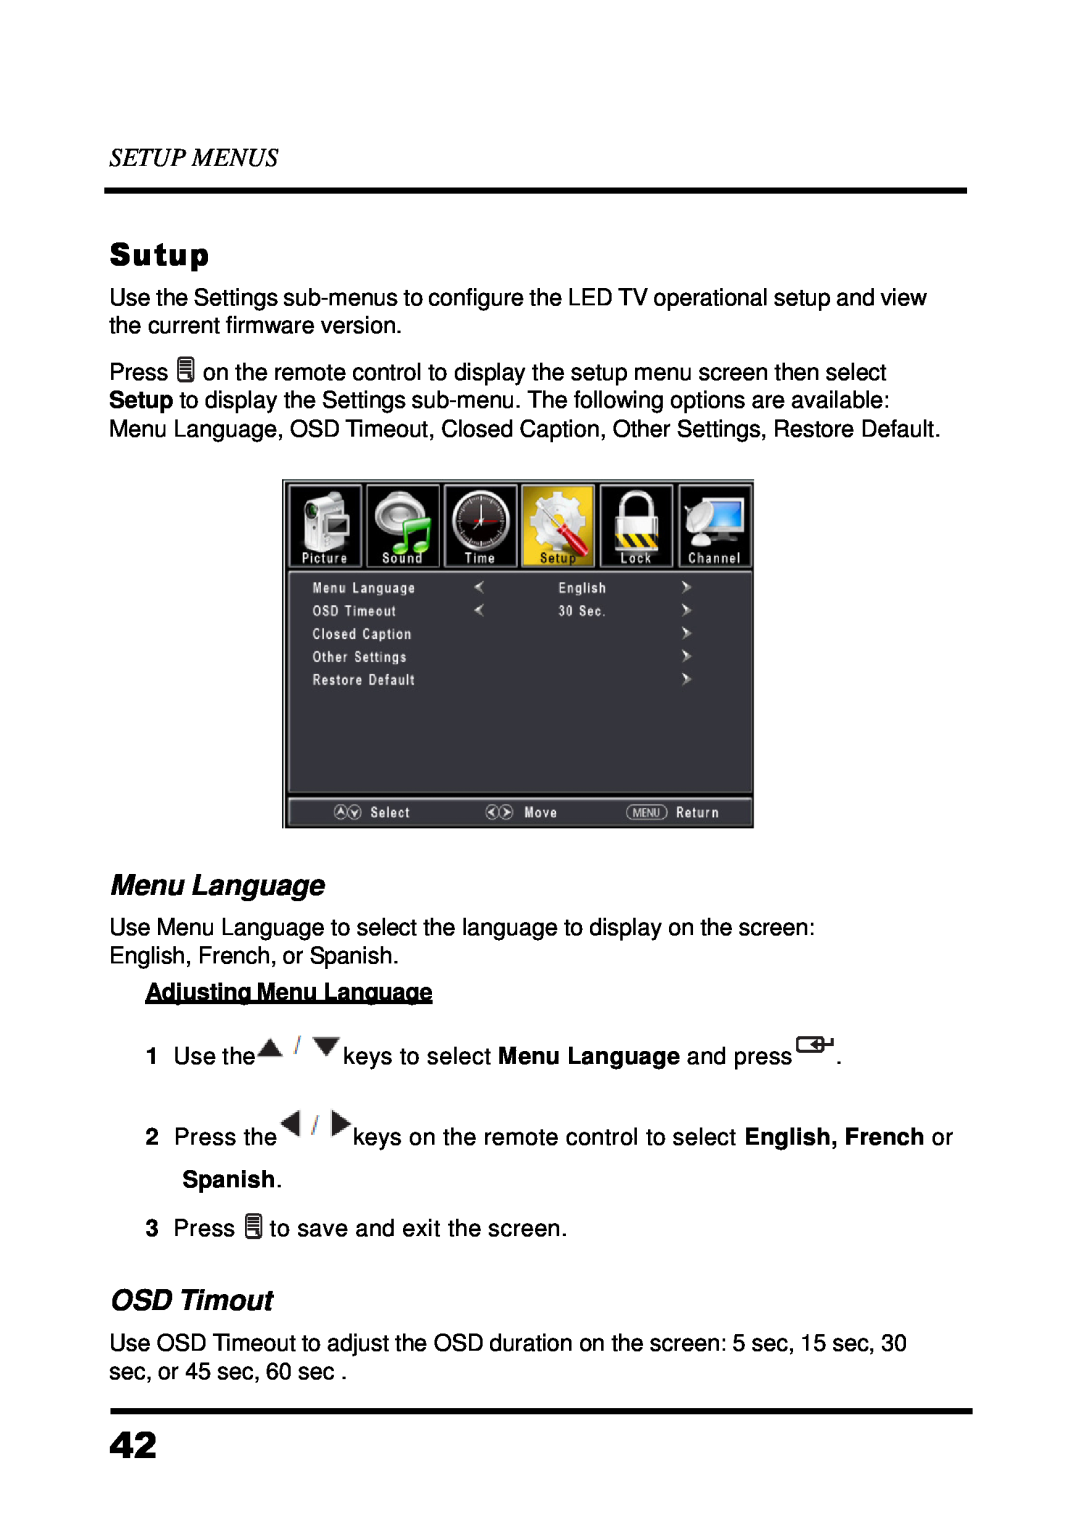 Westinghouse UW48T7HW manual Sutup, OSD Timout, Setup Menus, Adjusting Menu Language 